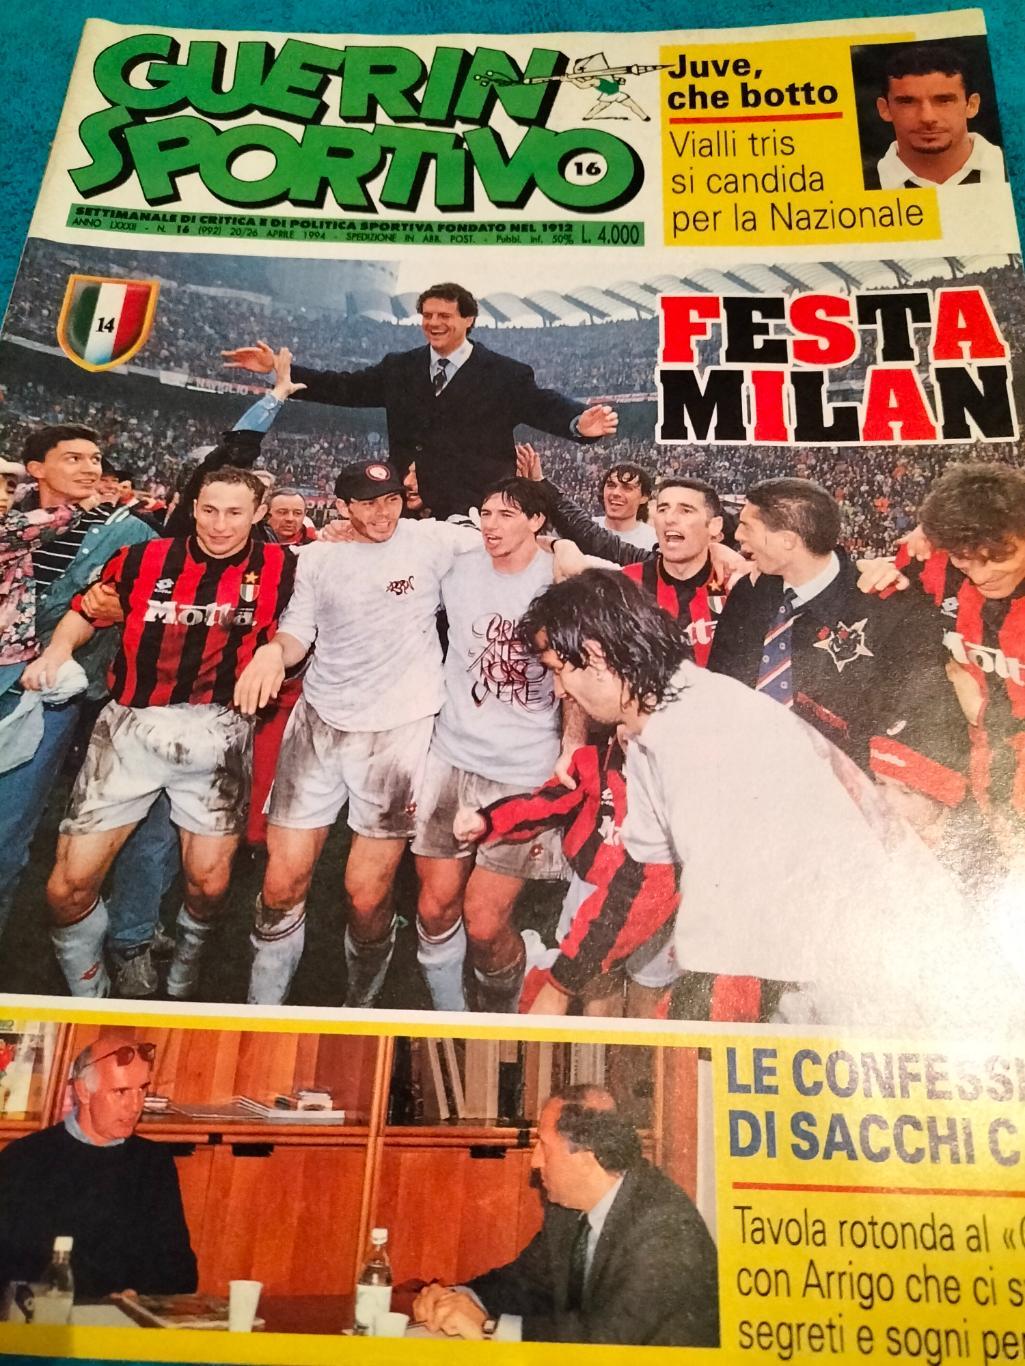 Журнал Guerin Sportivo №16 1994 по футболу.